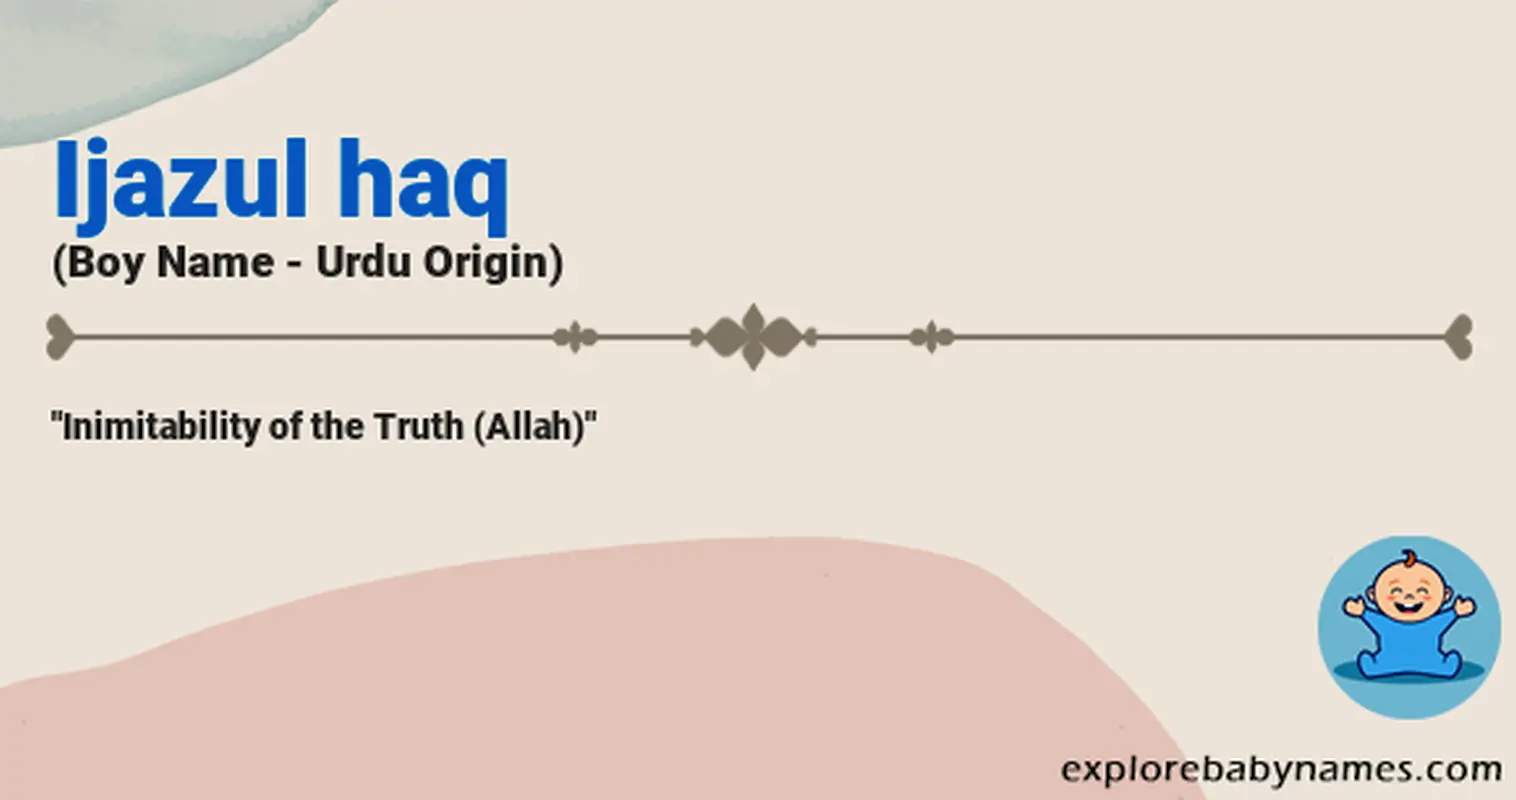 Meaning of Ijazul haq